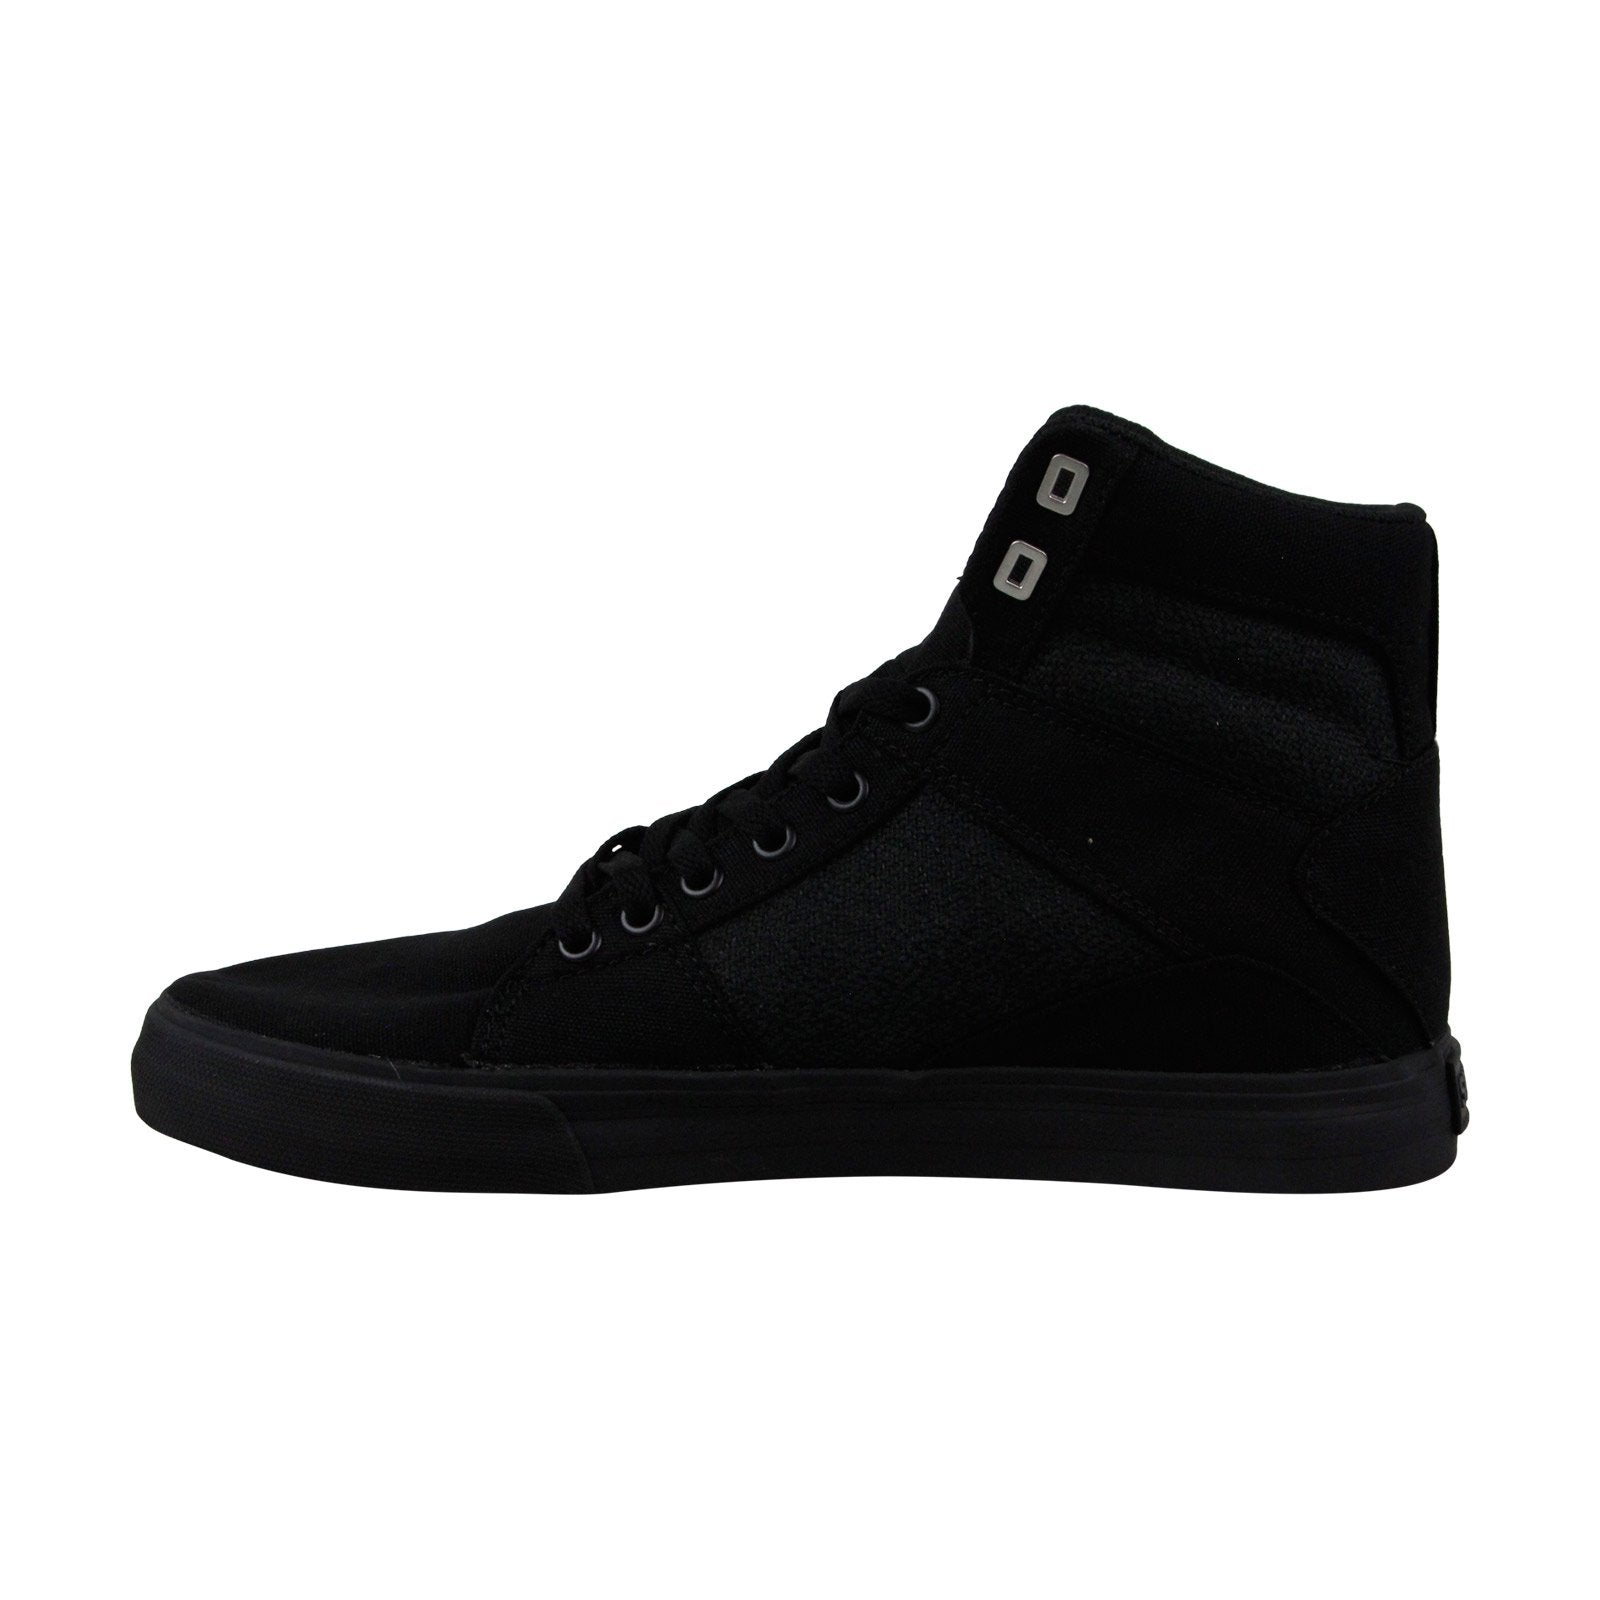 Supra Aluminum 05662 001 M Mens Black Canvas High Top Skate Sneakers S Ruze Shoes